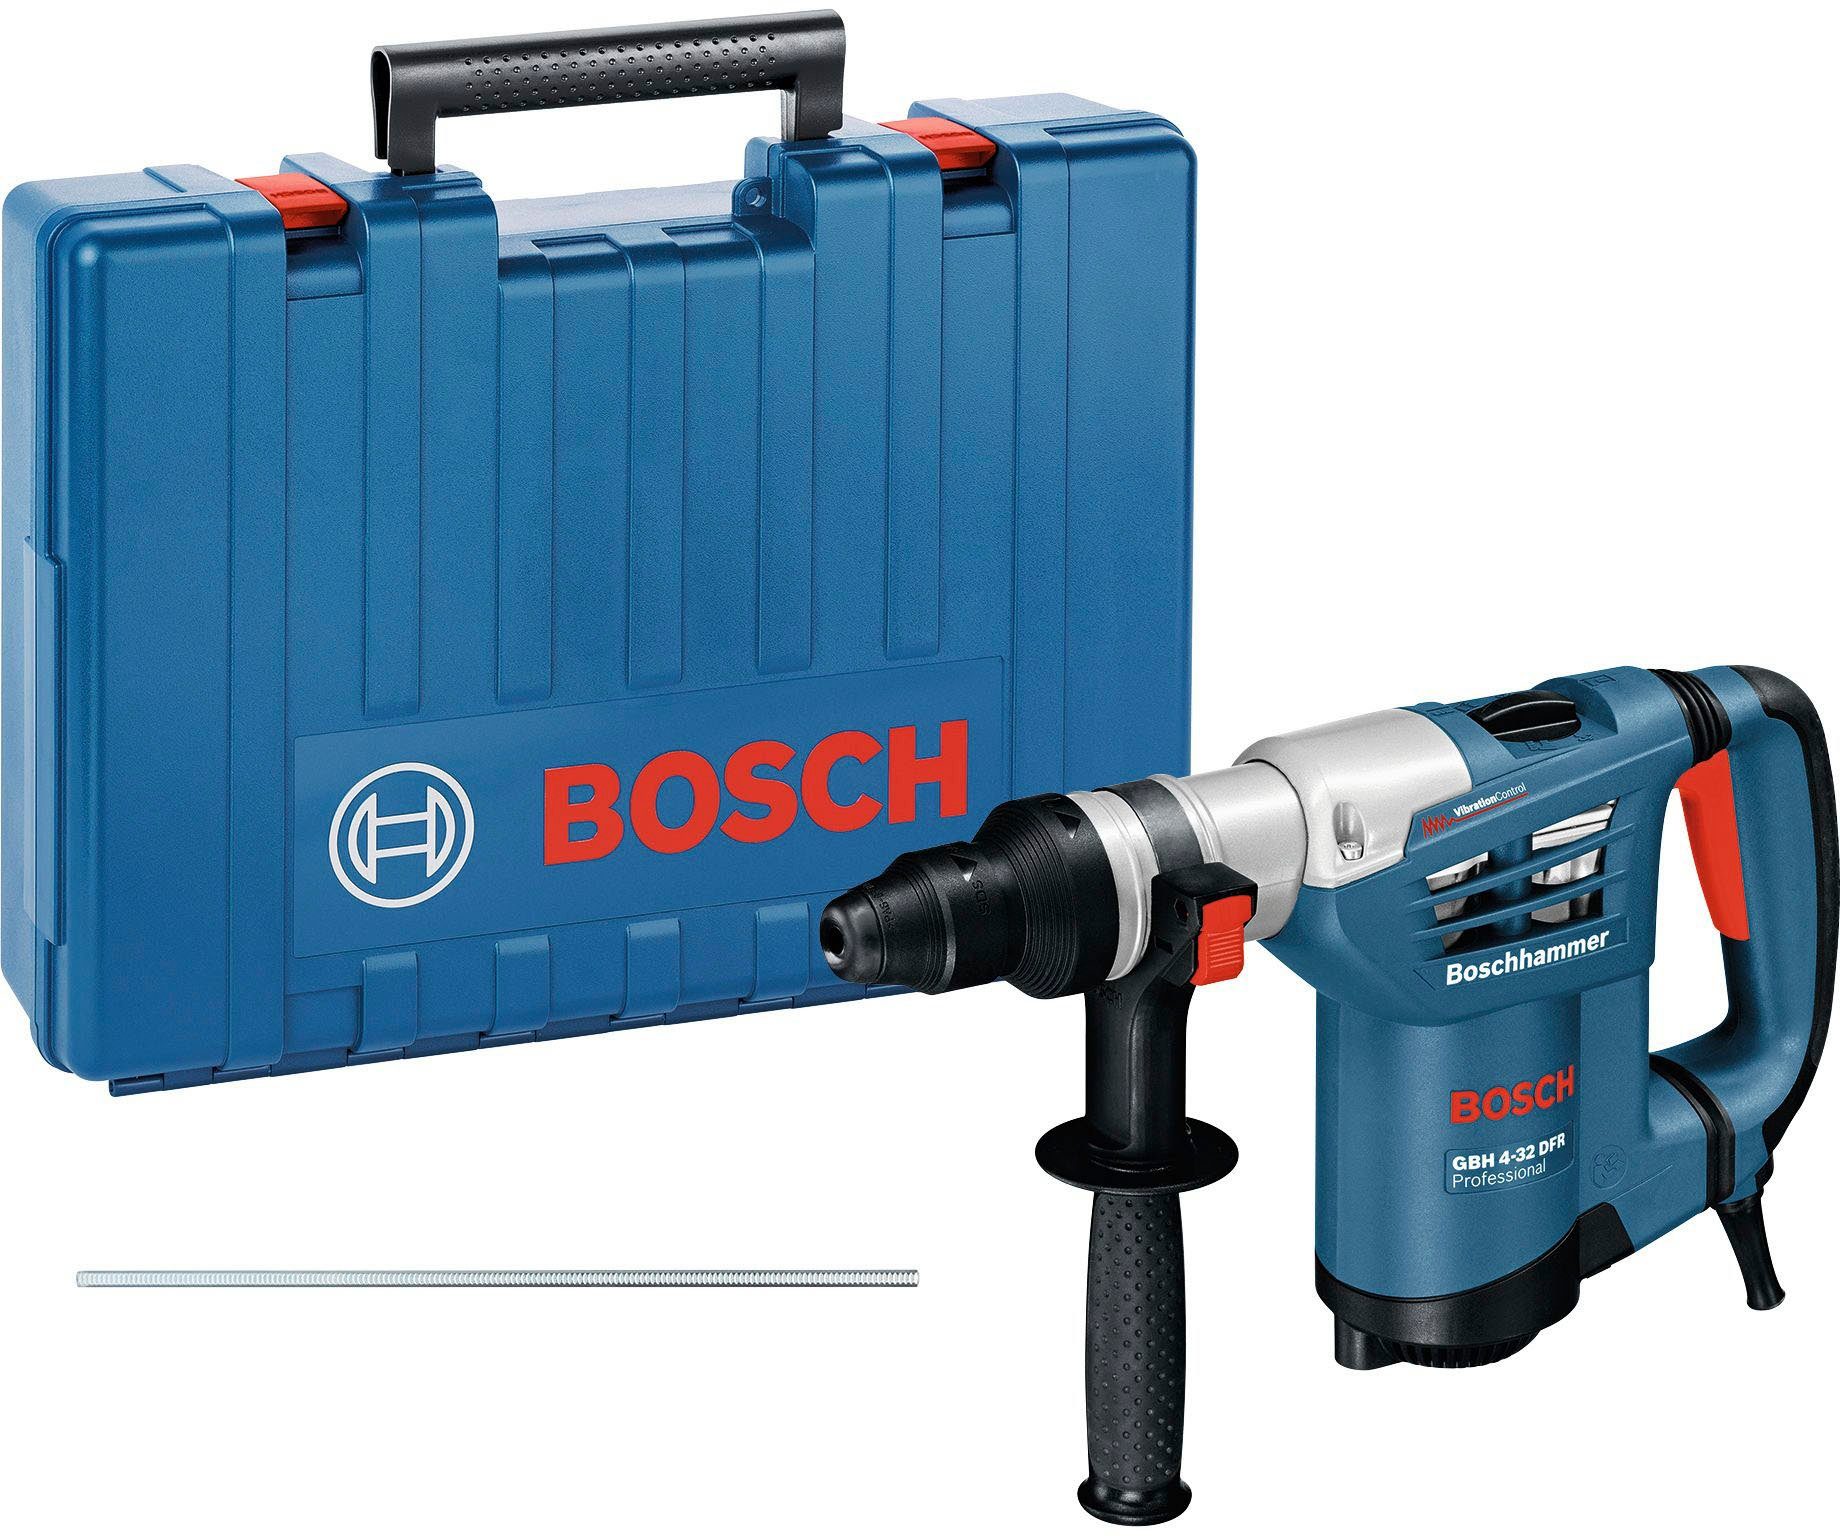 780 max. GBH DFR, Bosch U/min, Bohrhammer Professional 4-32 (Set)